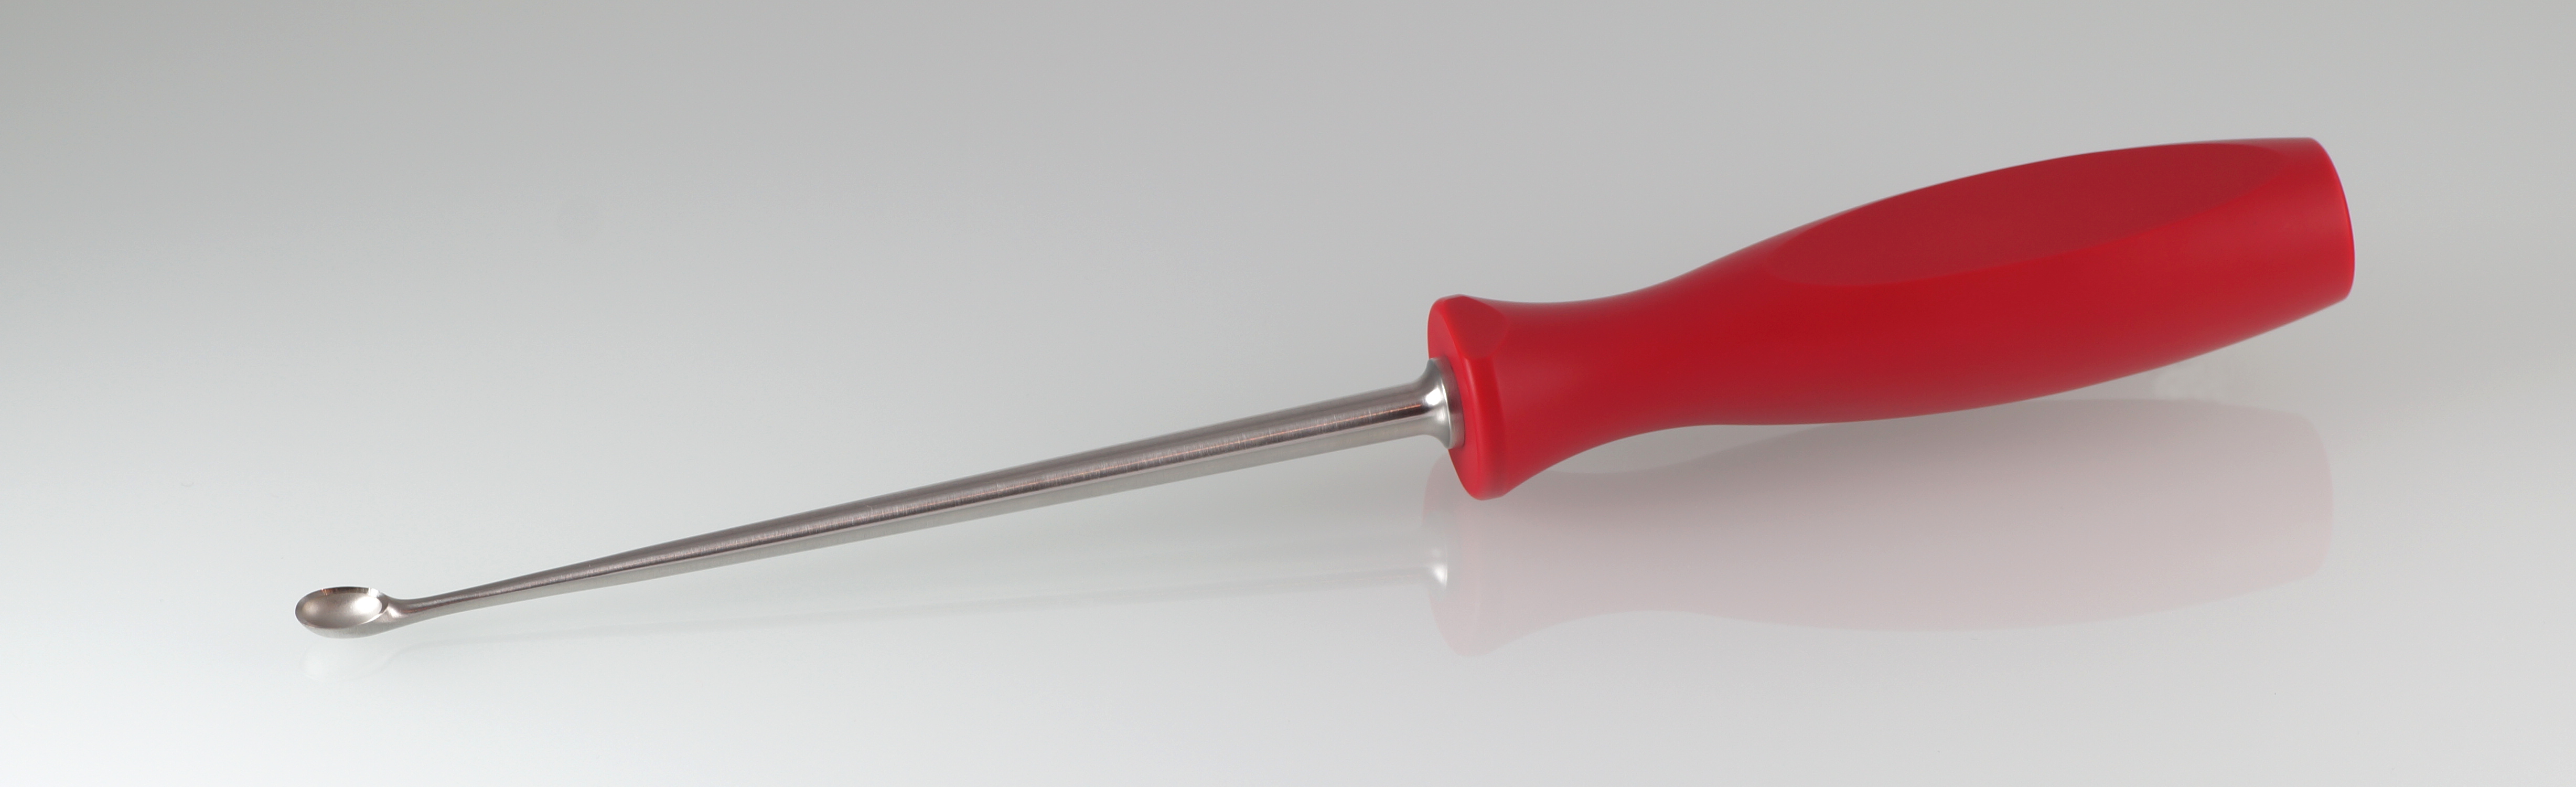 BRUNS bone curette with red ergonomic handle